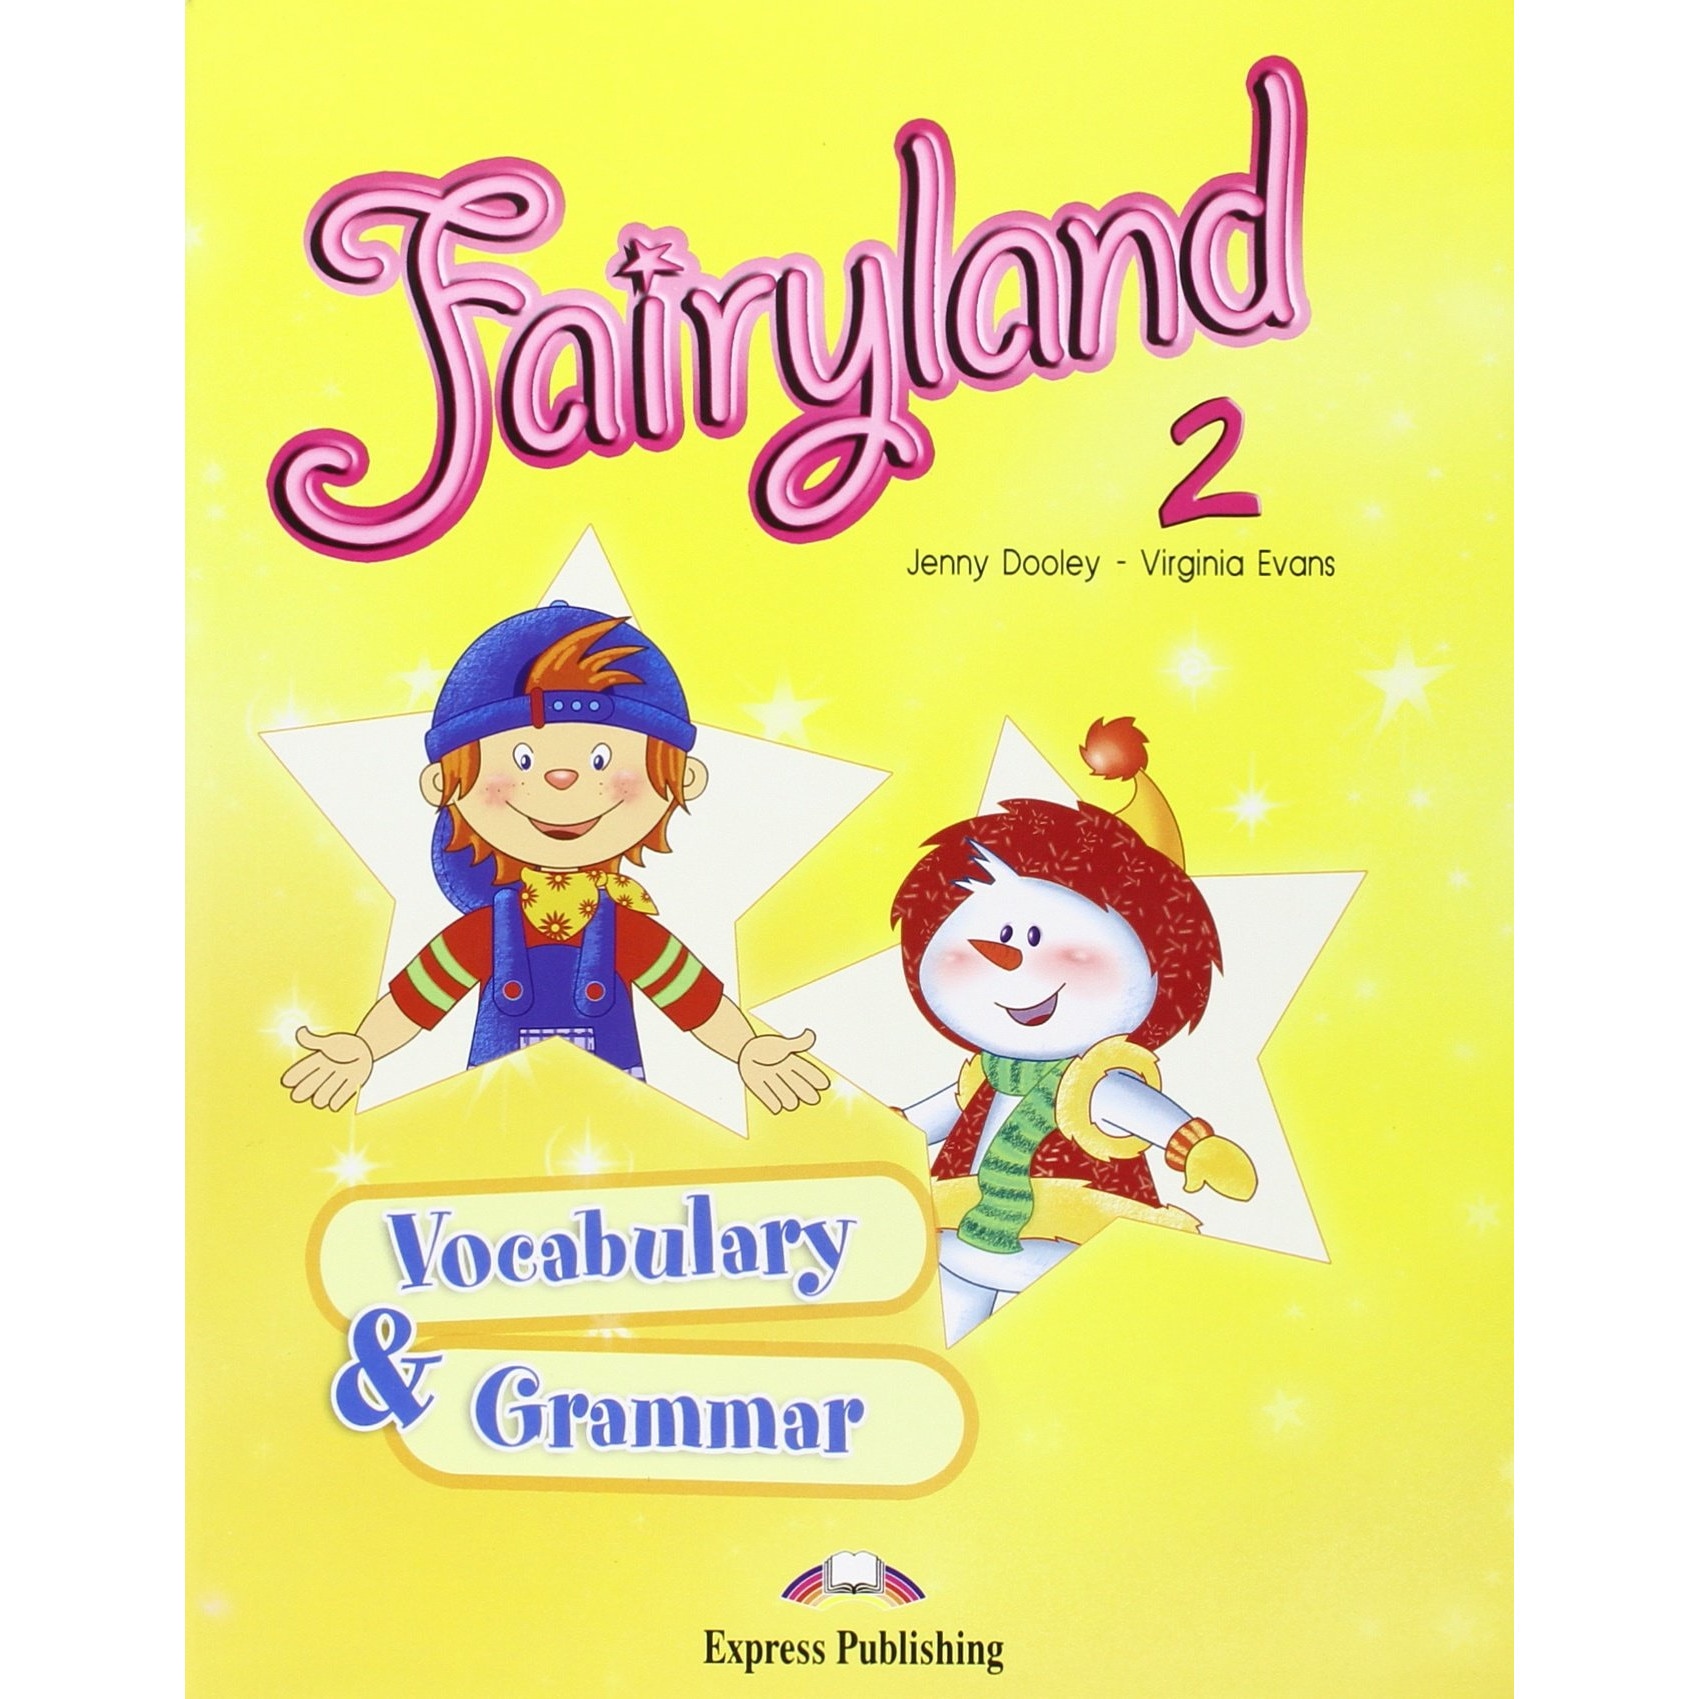 Fairyland 1 pupil's book. Fairyland 1 pupil's Audio CD. Vocabulary 2 book